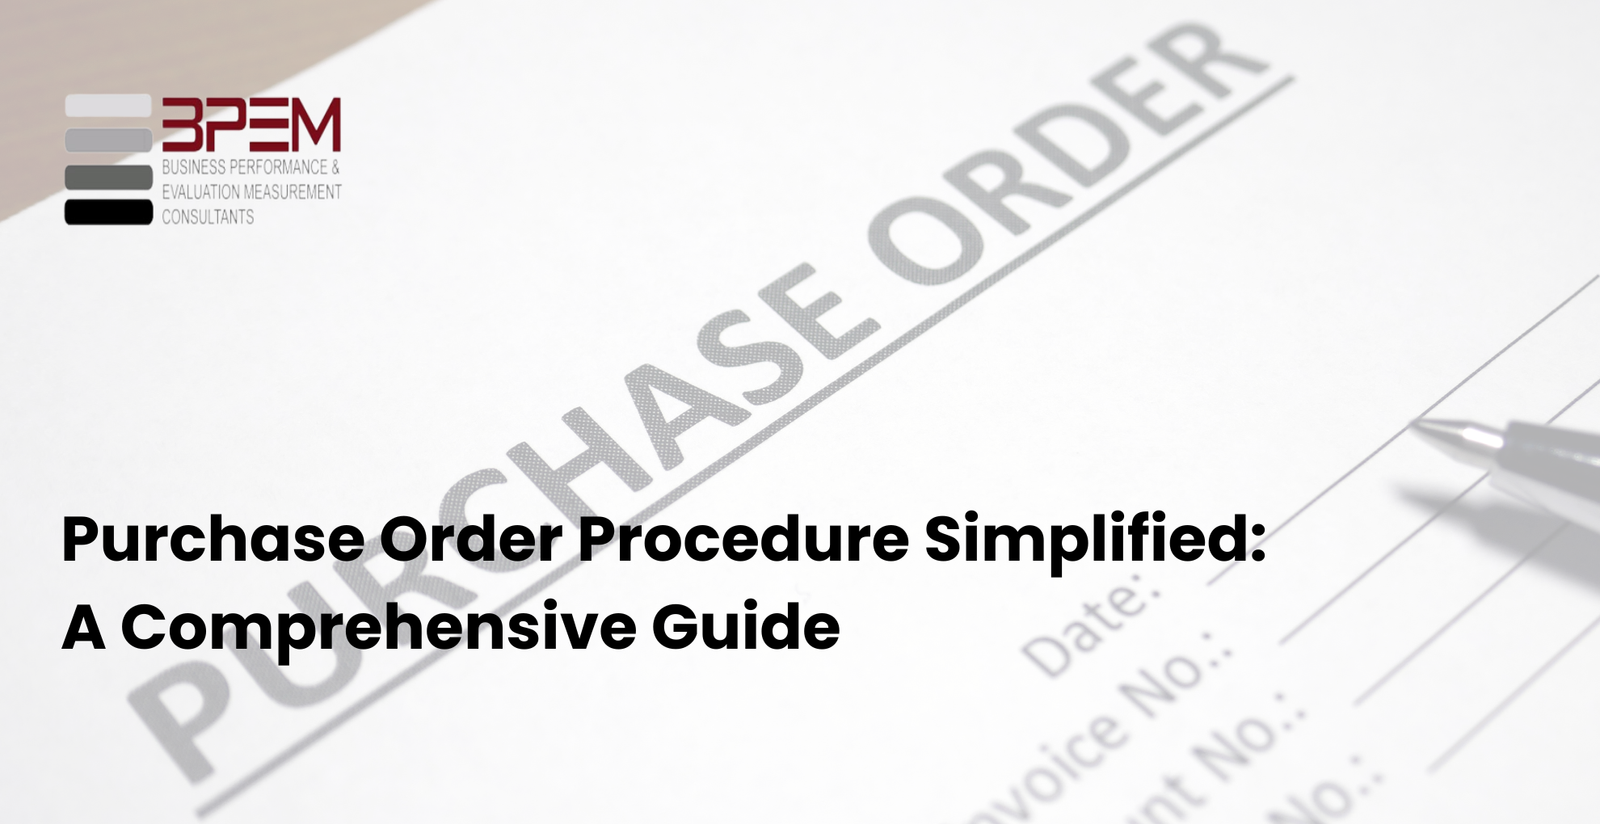 Purchase order procedure